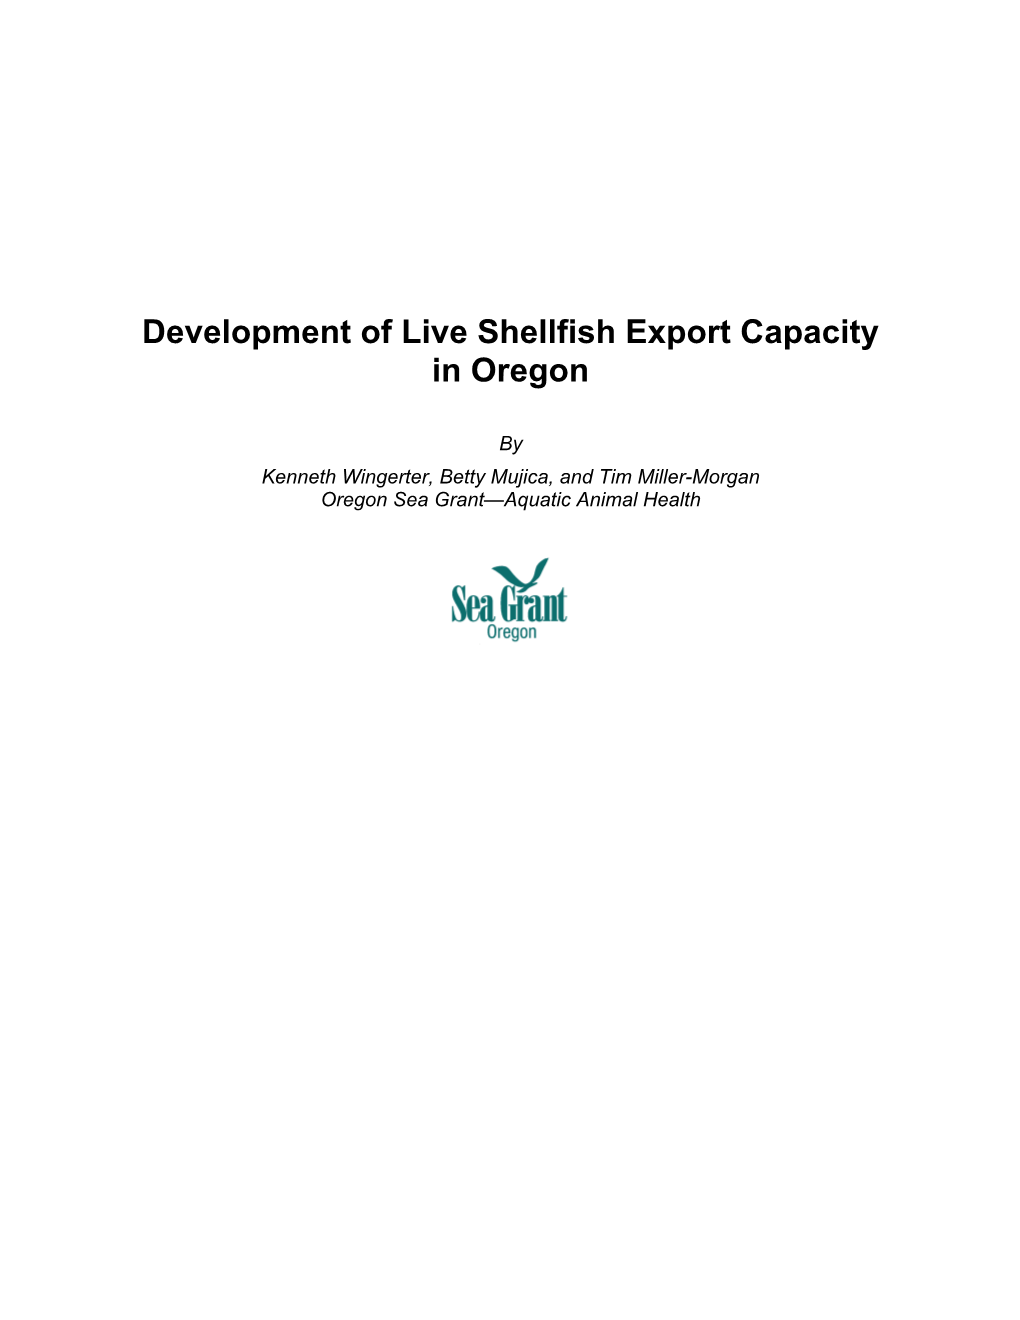 Development of Live Shellfish Capacity in Oregon